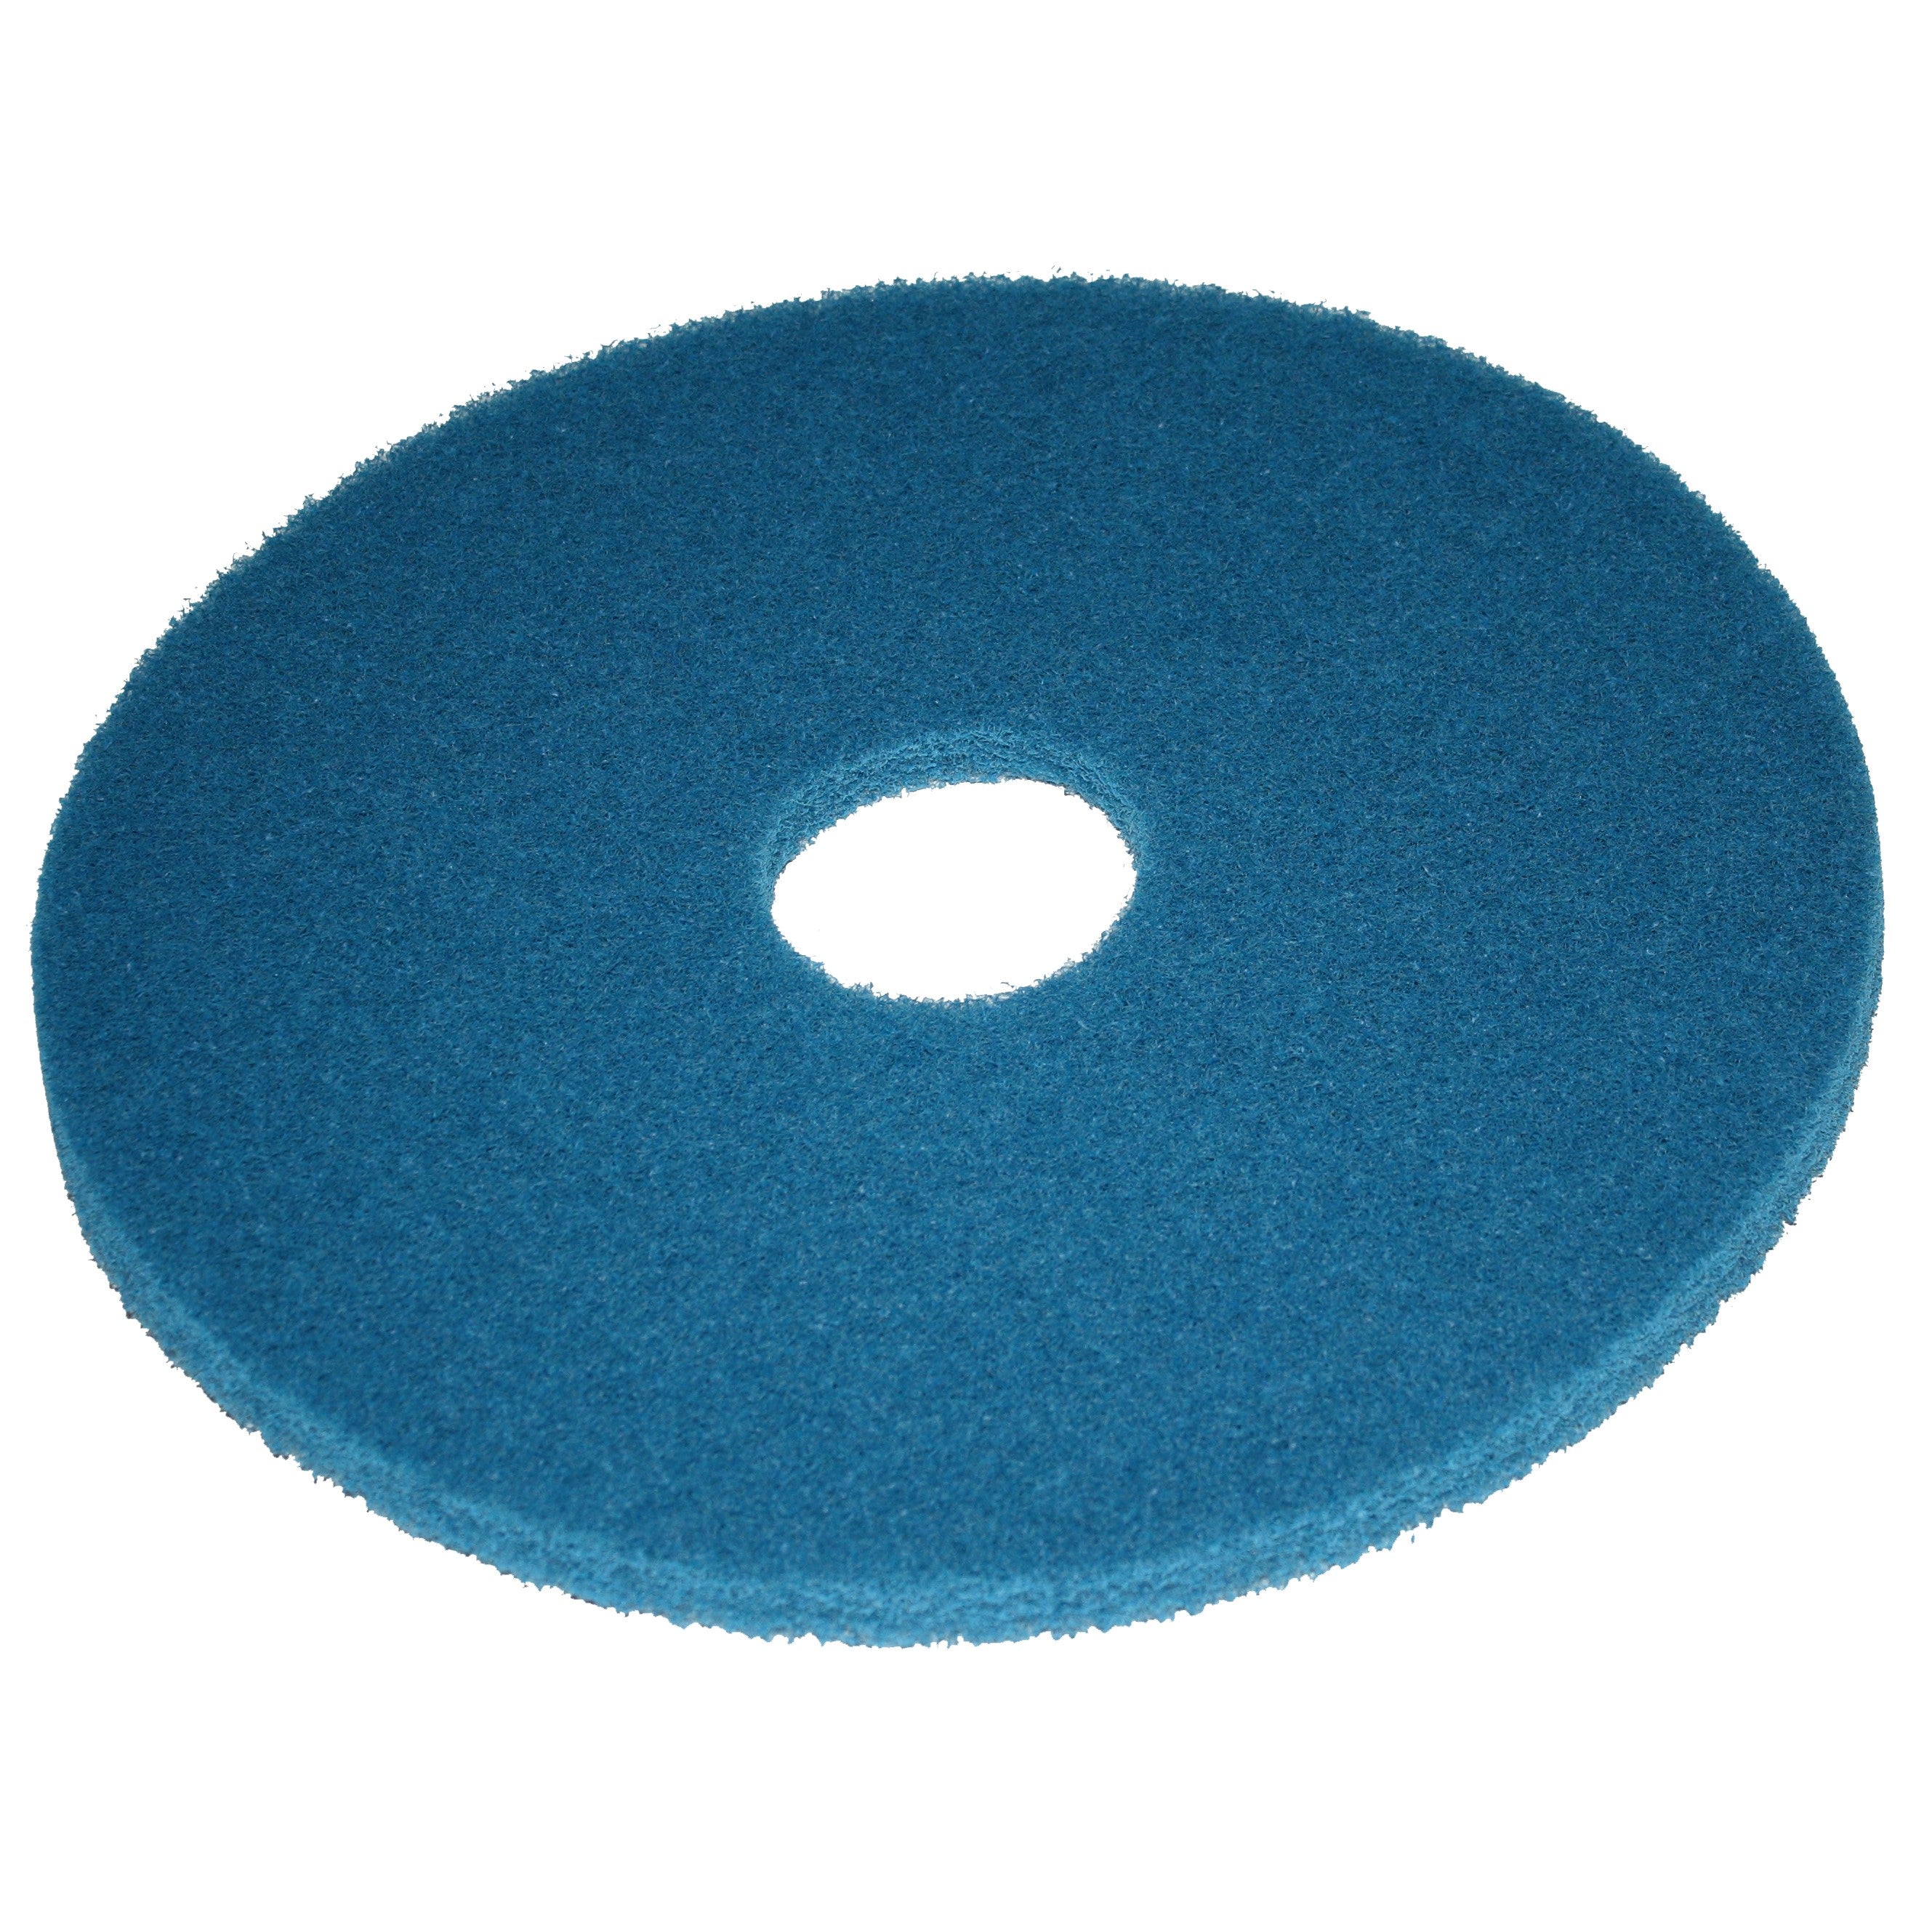 Pad blau, Ø 330 mm, Polyester